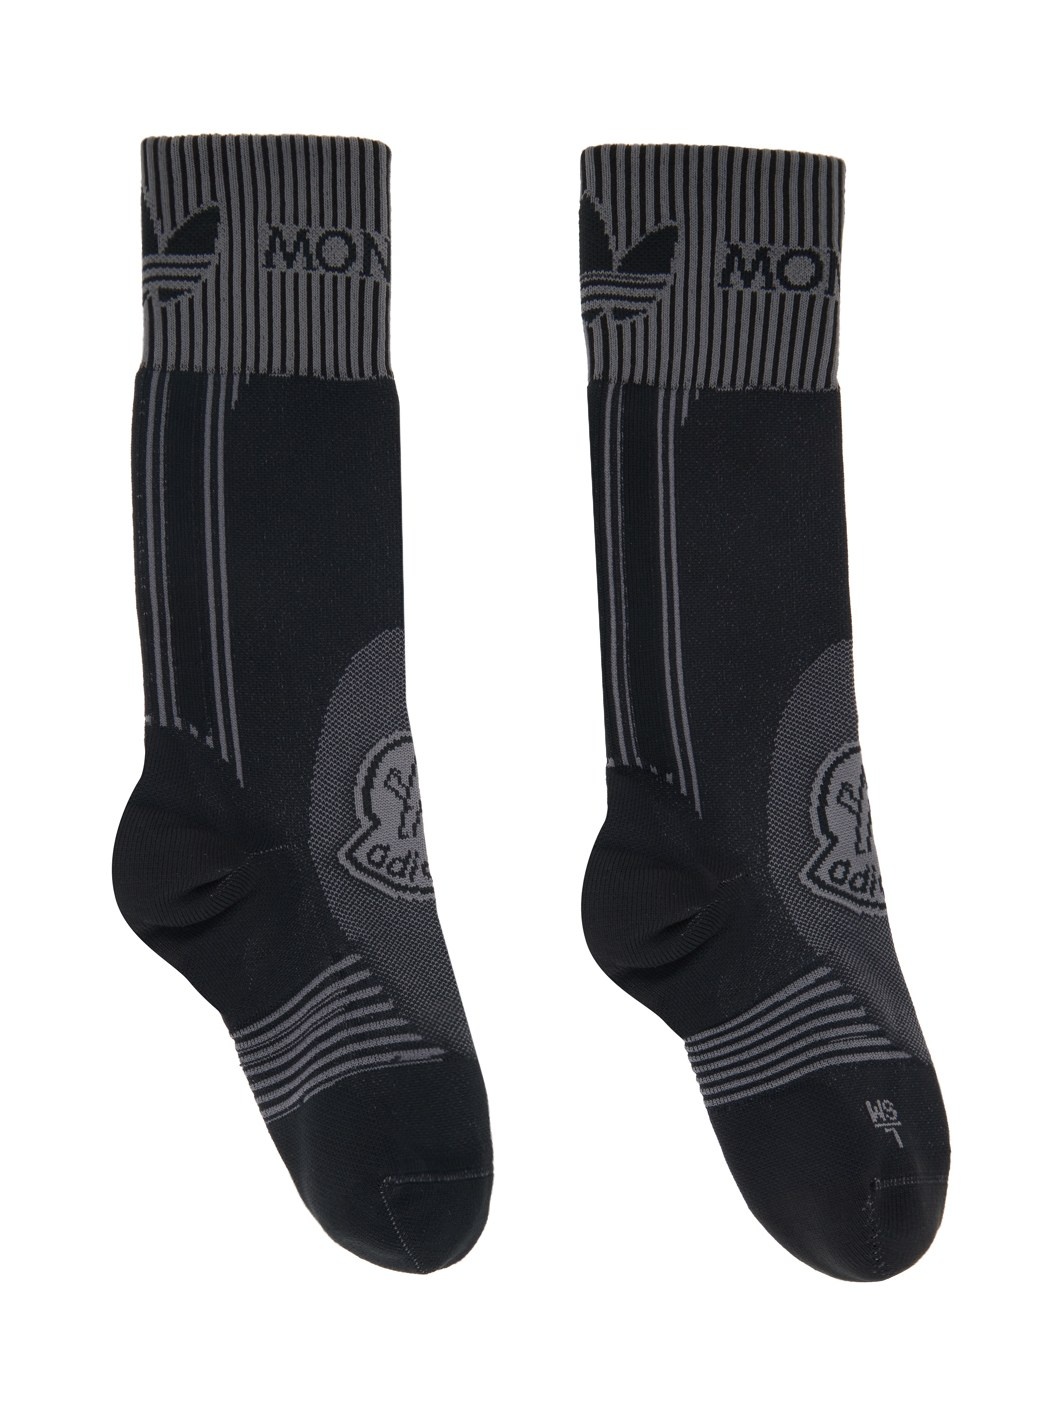 Moncler x adidas Originals Black Socks - 1